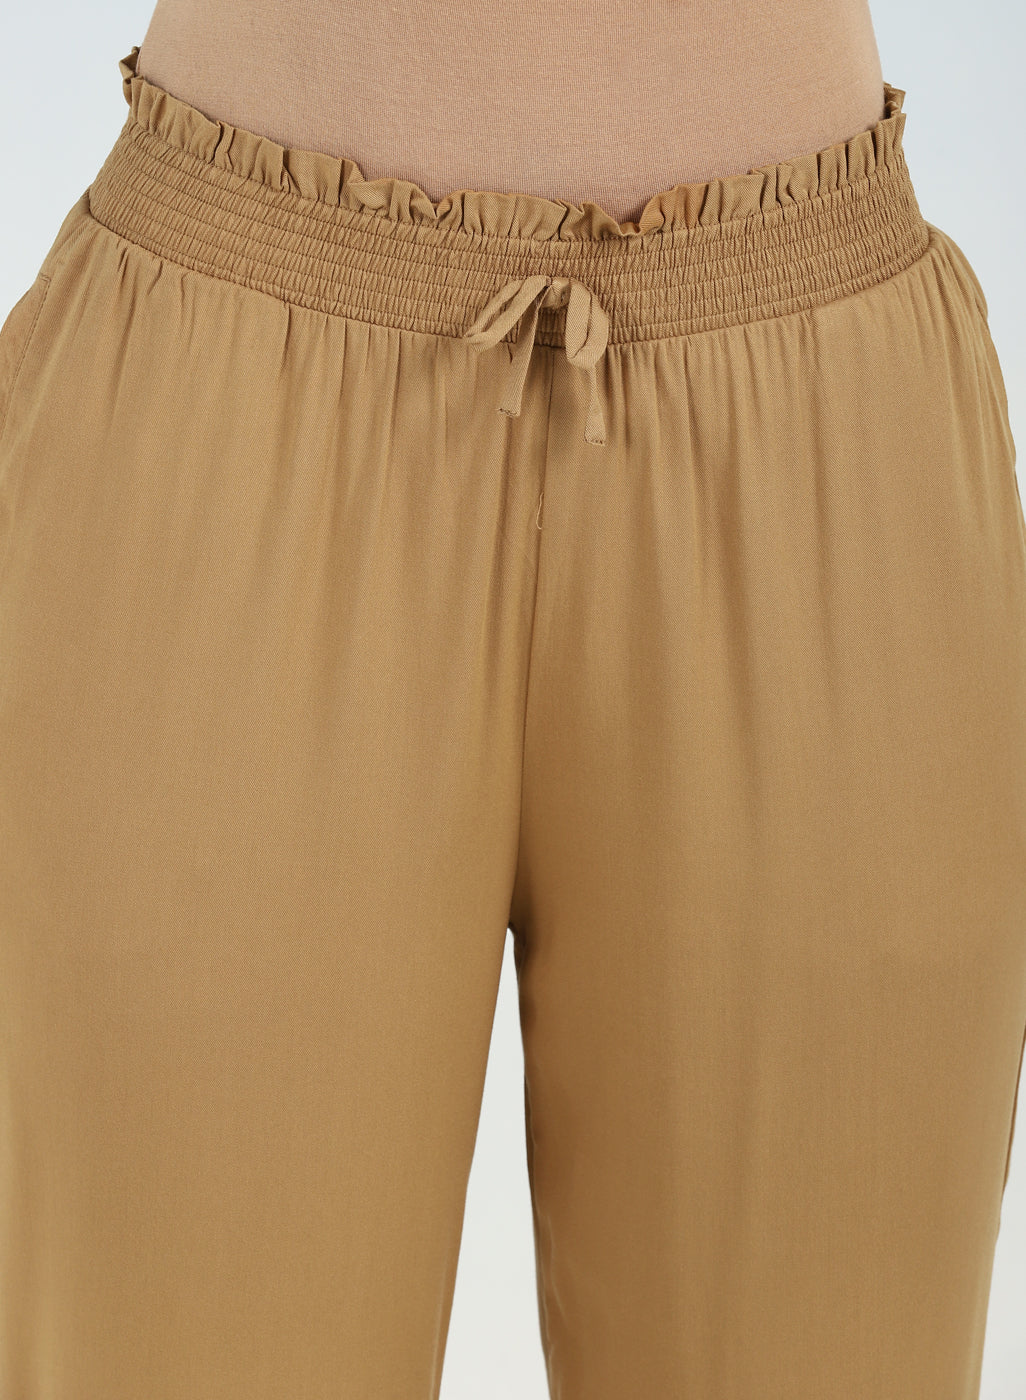 ZARA Cropped Drawstring Crepe Trouser / Work Pant | Trouser pants women, Work  pants, Clothes design